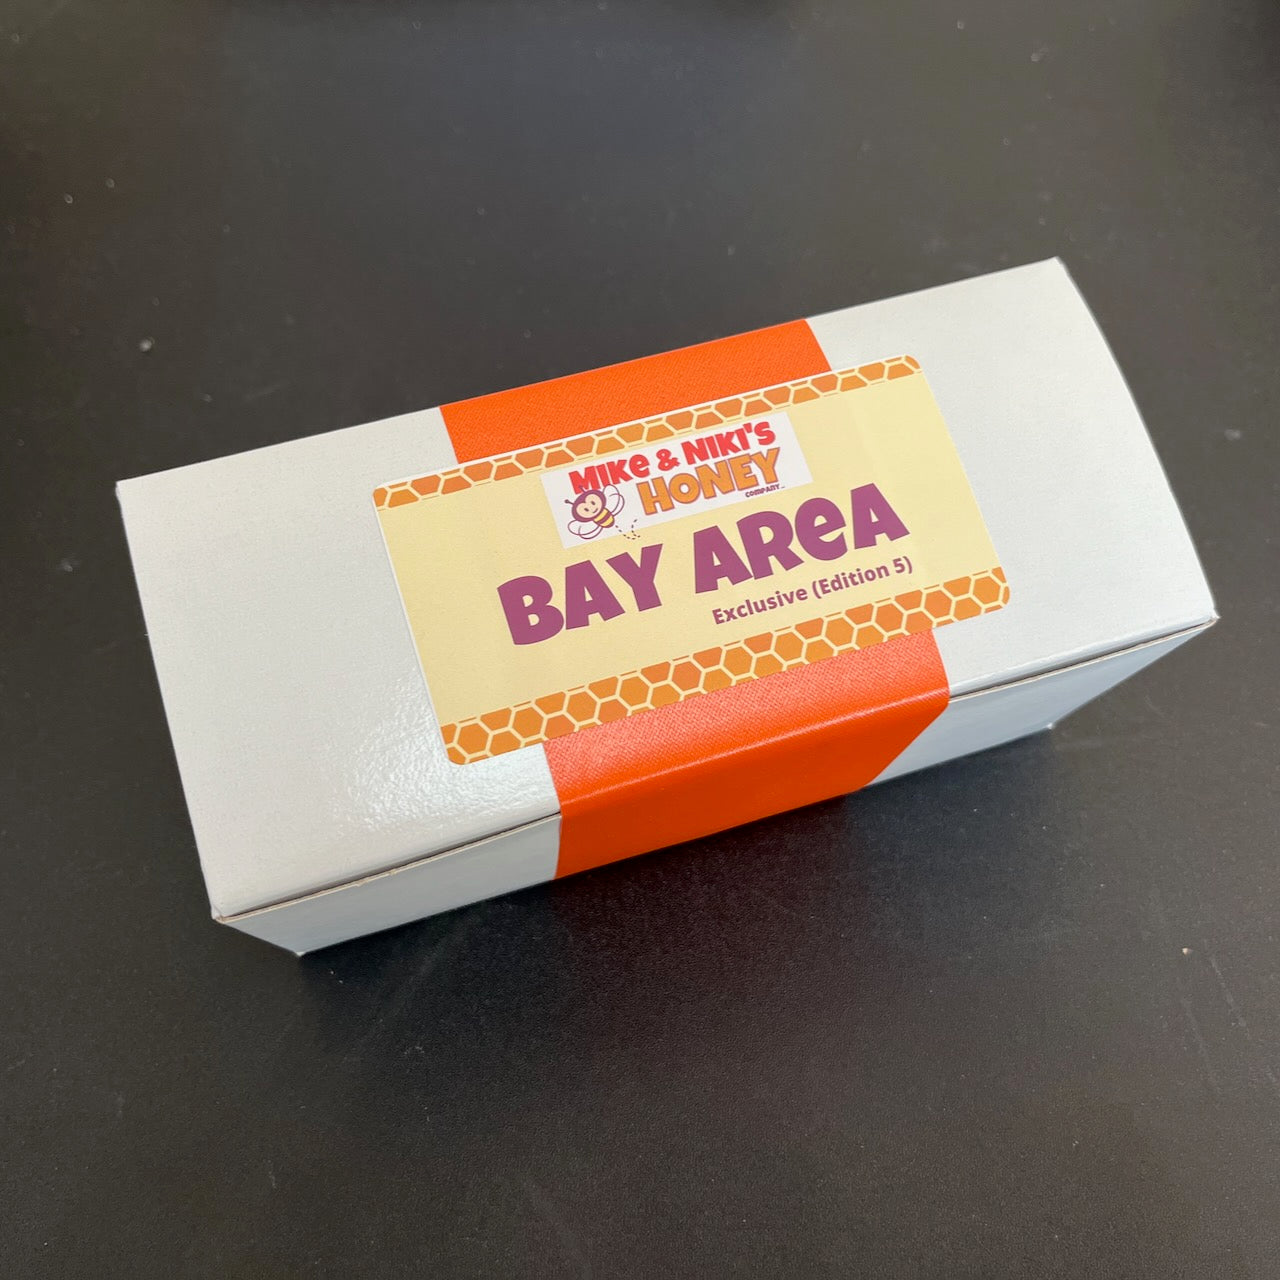 Bay Area Exclusive